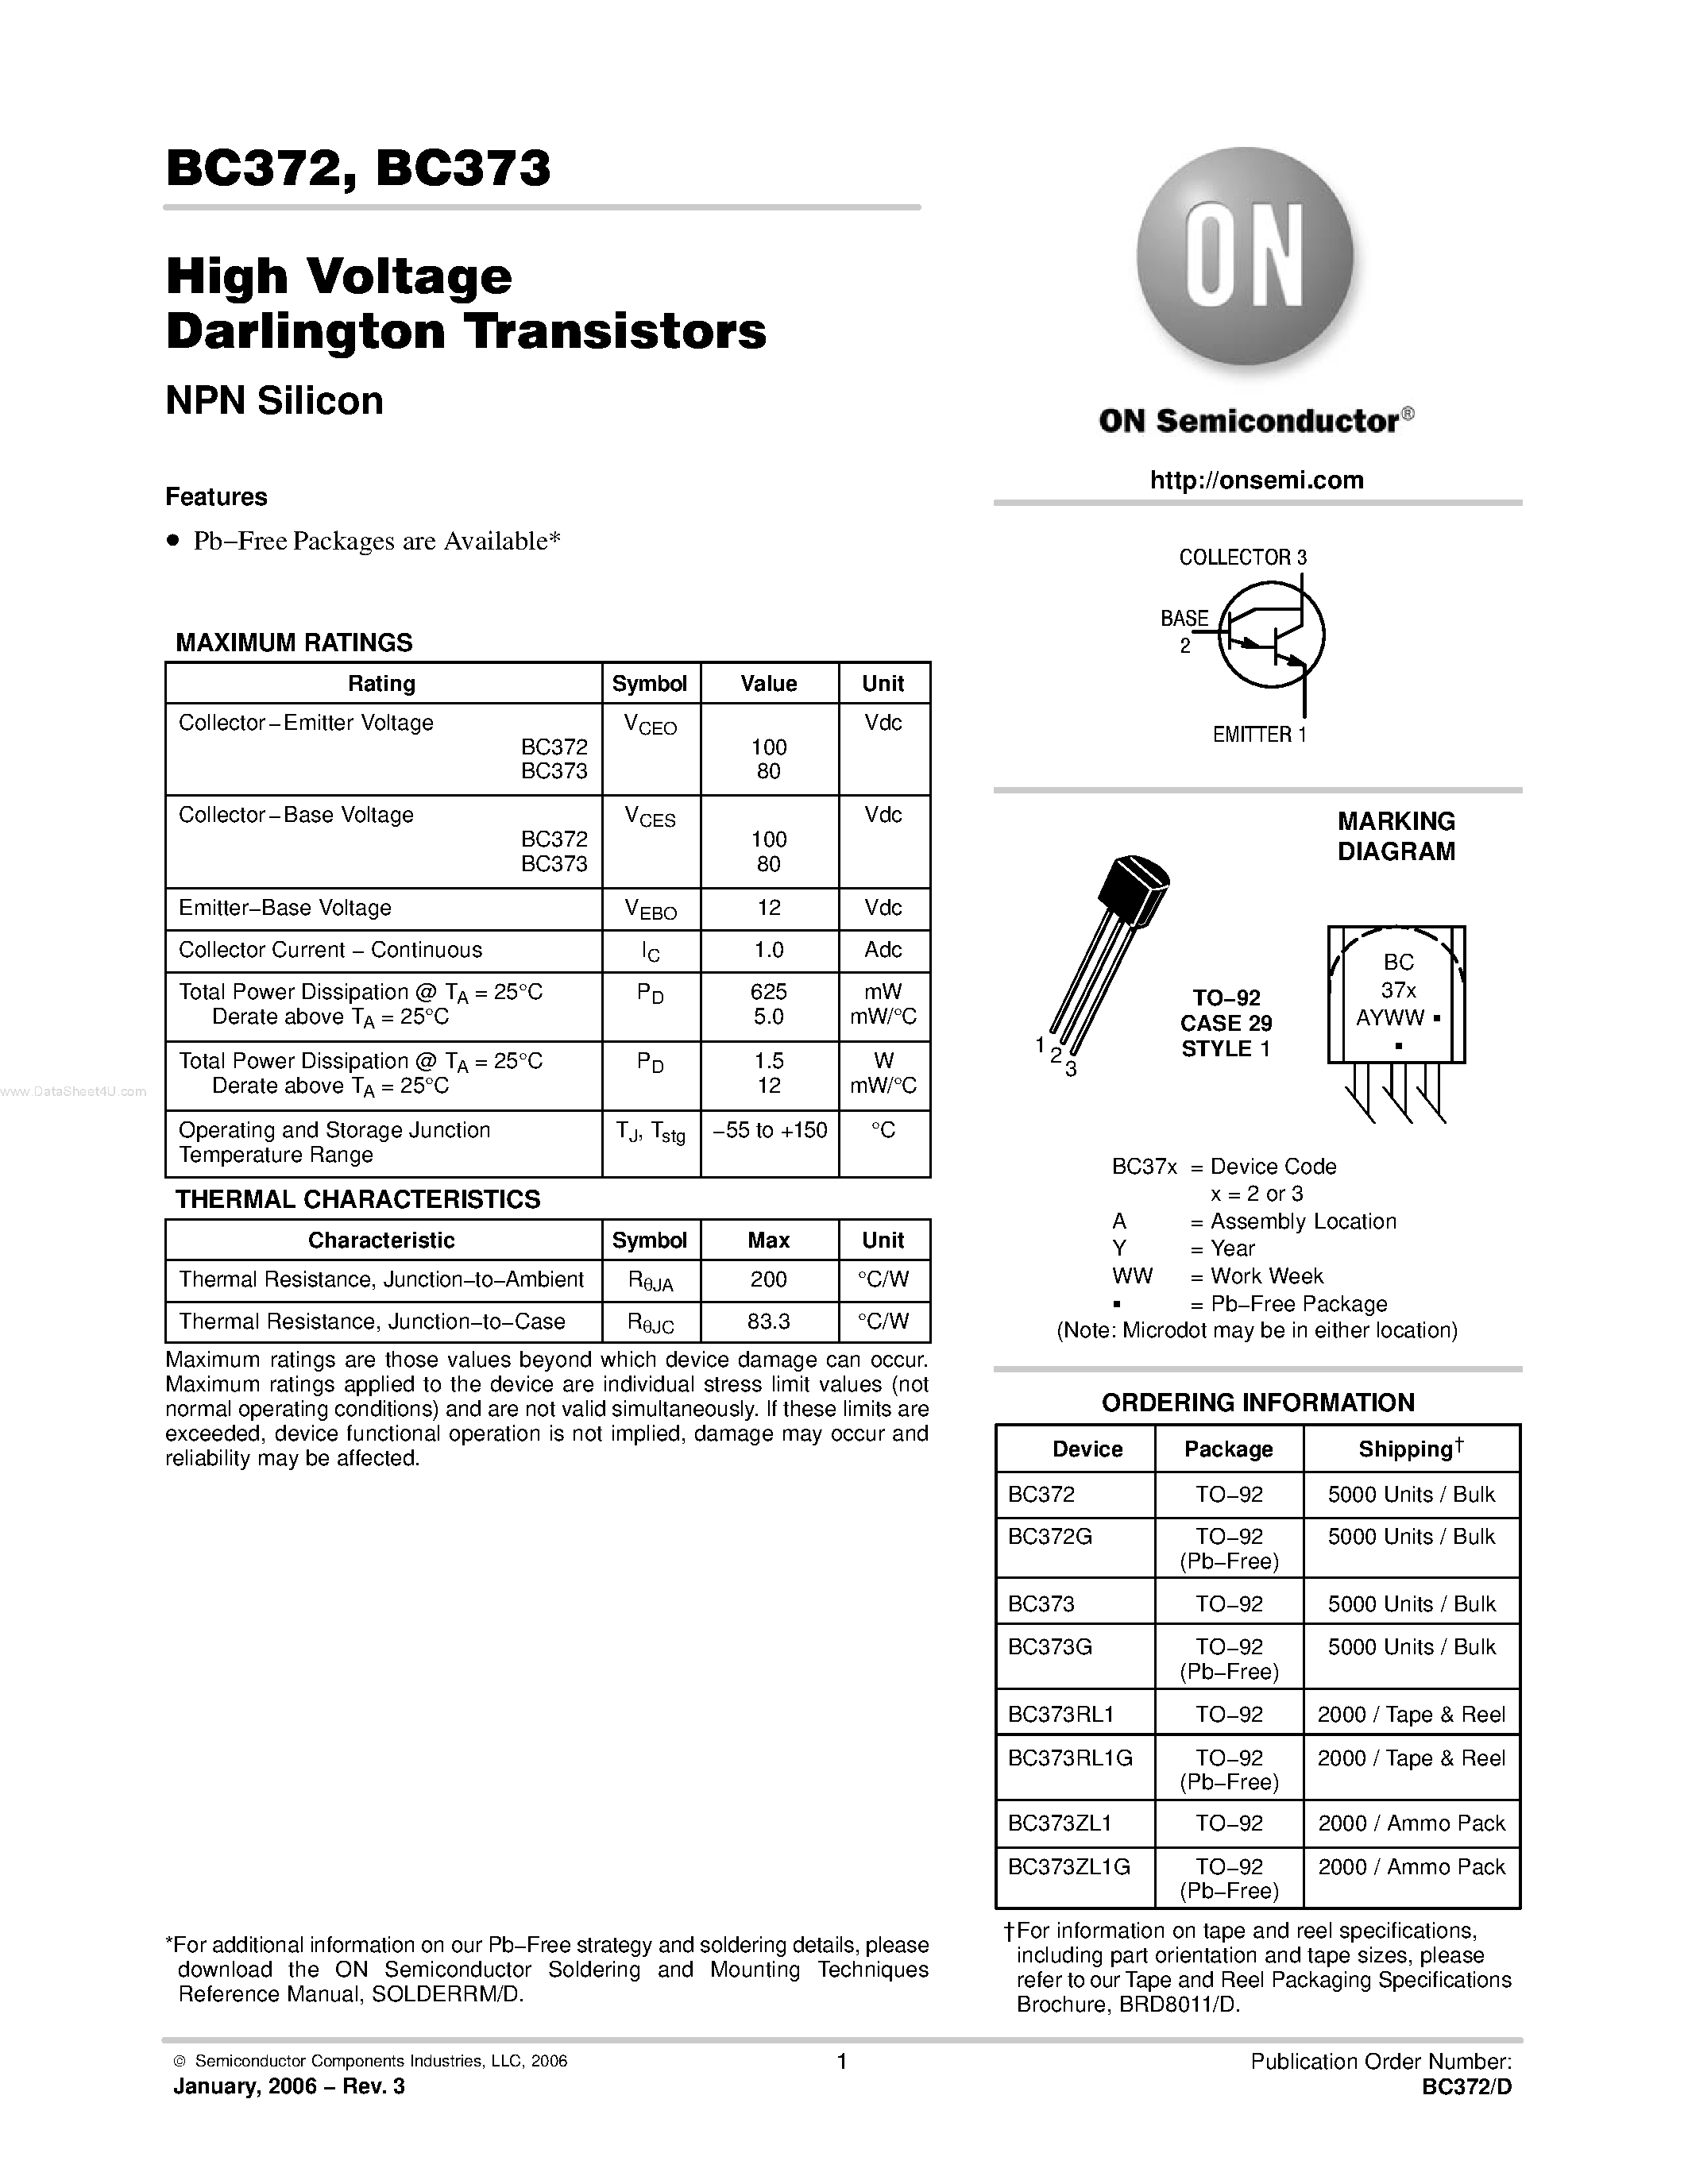 Datasheet BC373 - High Voltage Darlington Transistors(NPN Silicon) page 1